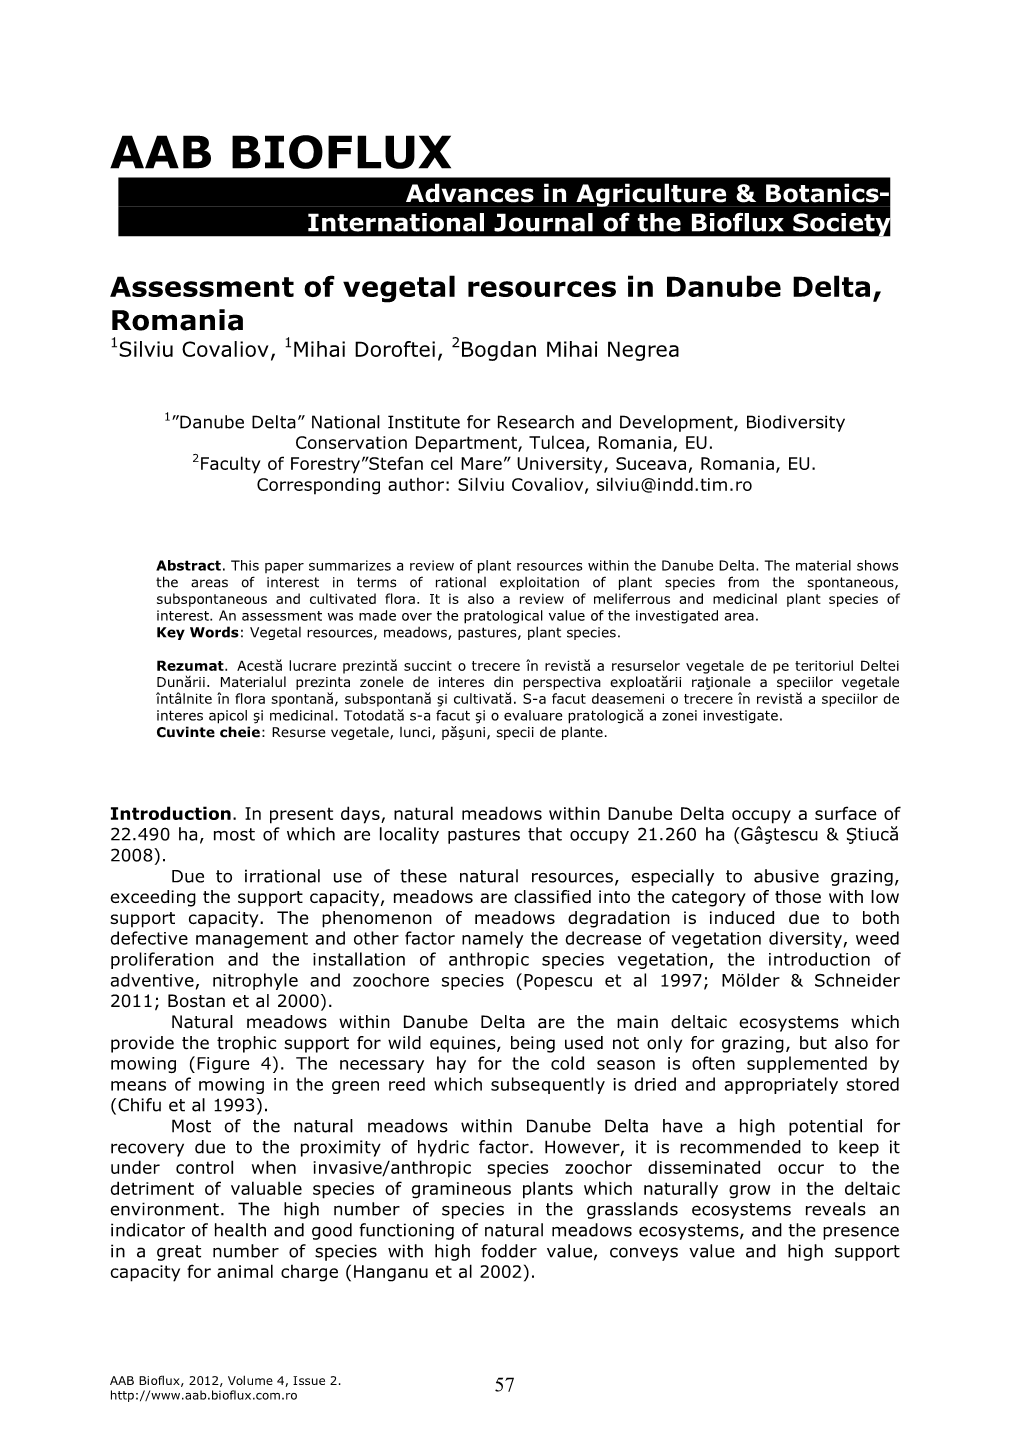 Assessment of Vegetal Resources in Danube Delta, Romania 1Silviu Covaliov, 1Mihai Doroftei, 2Bogdan Mihai Negrea